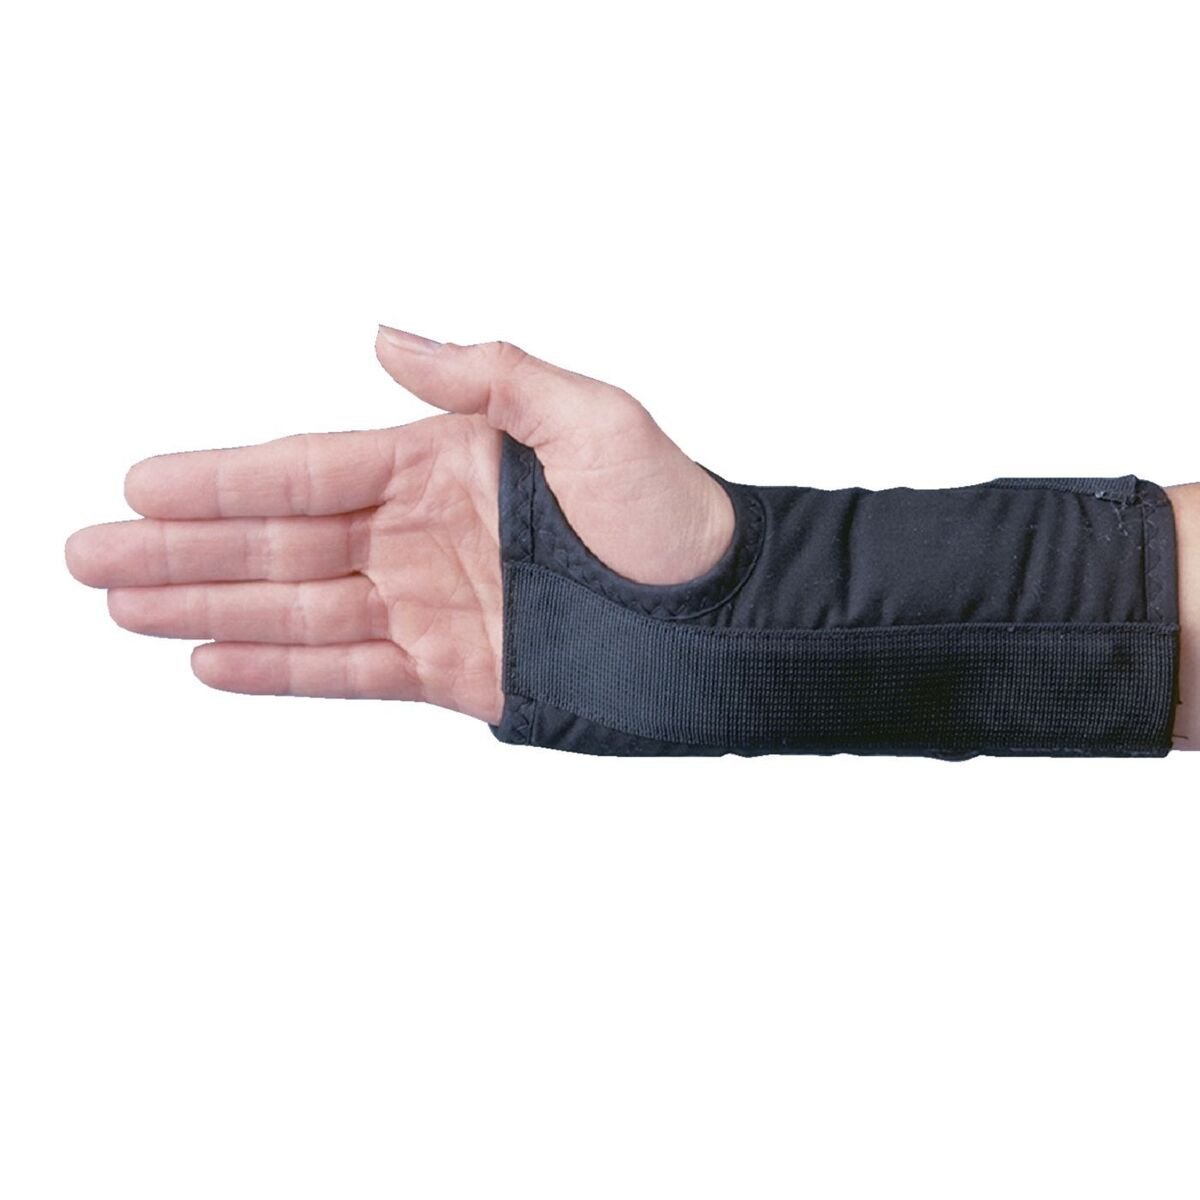 Rolyan D-Ring Right Wrist Brace, Size Small Fits Wrists 5.75